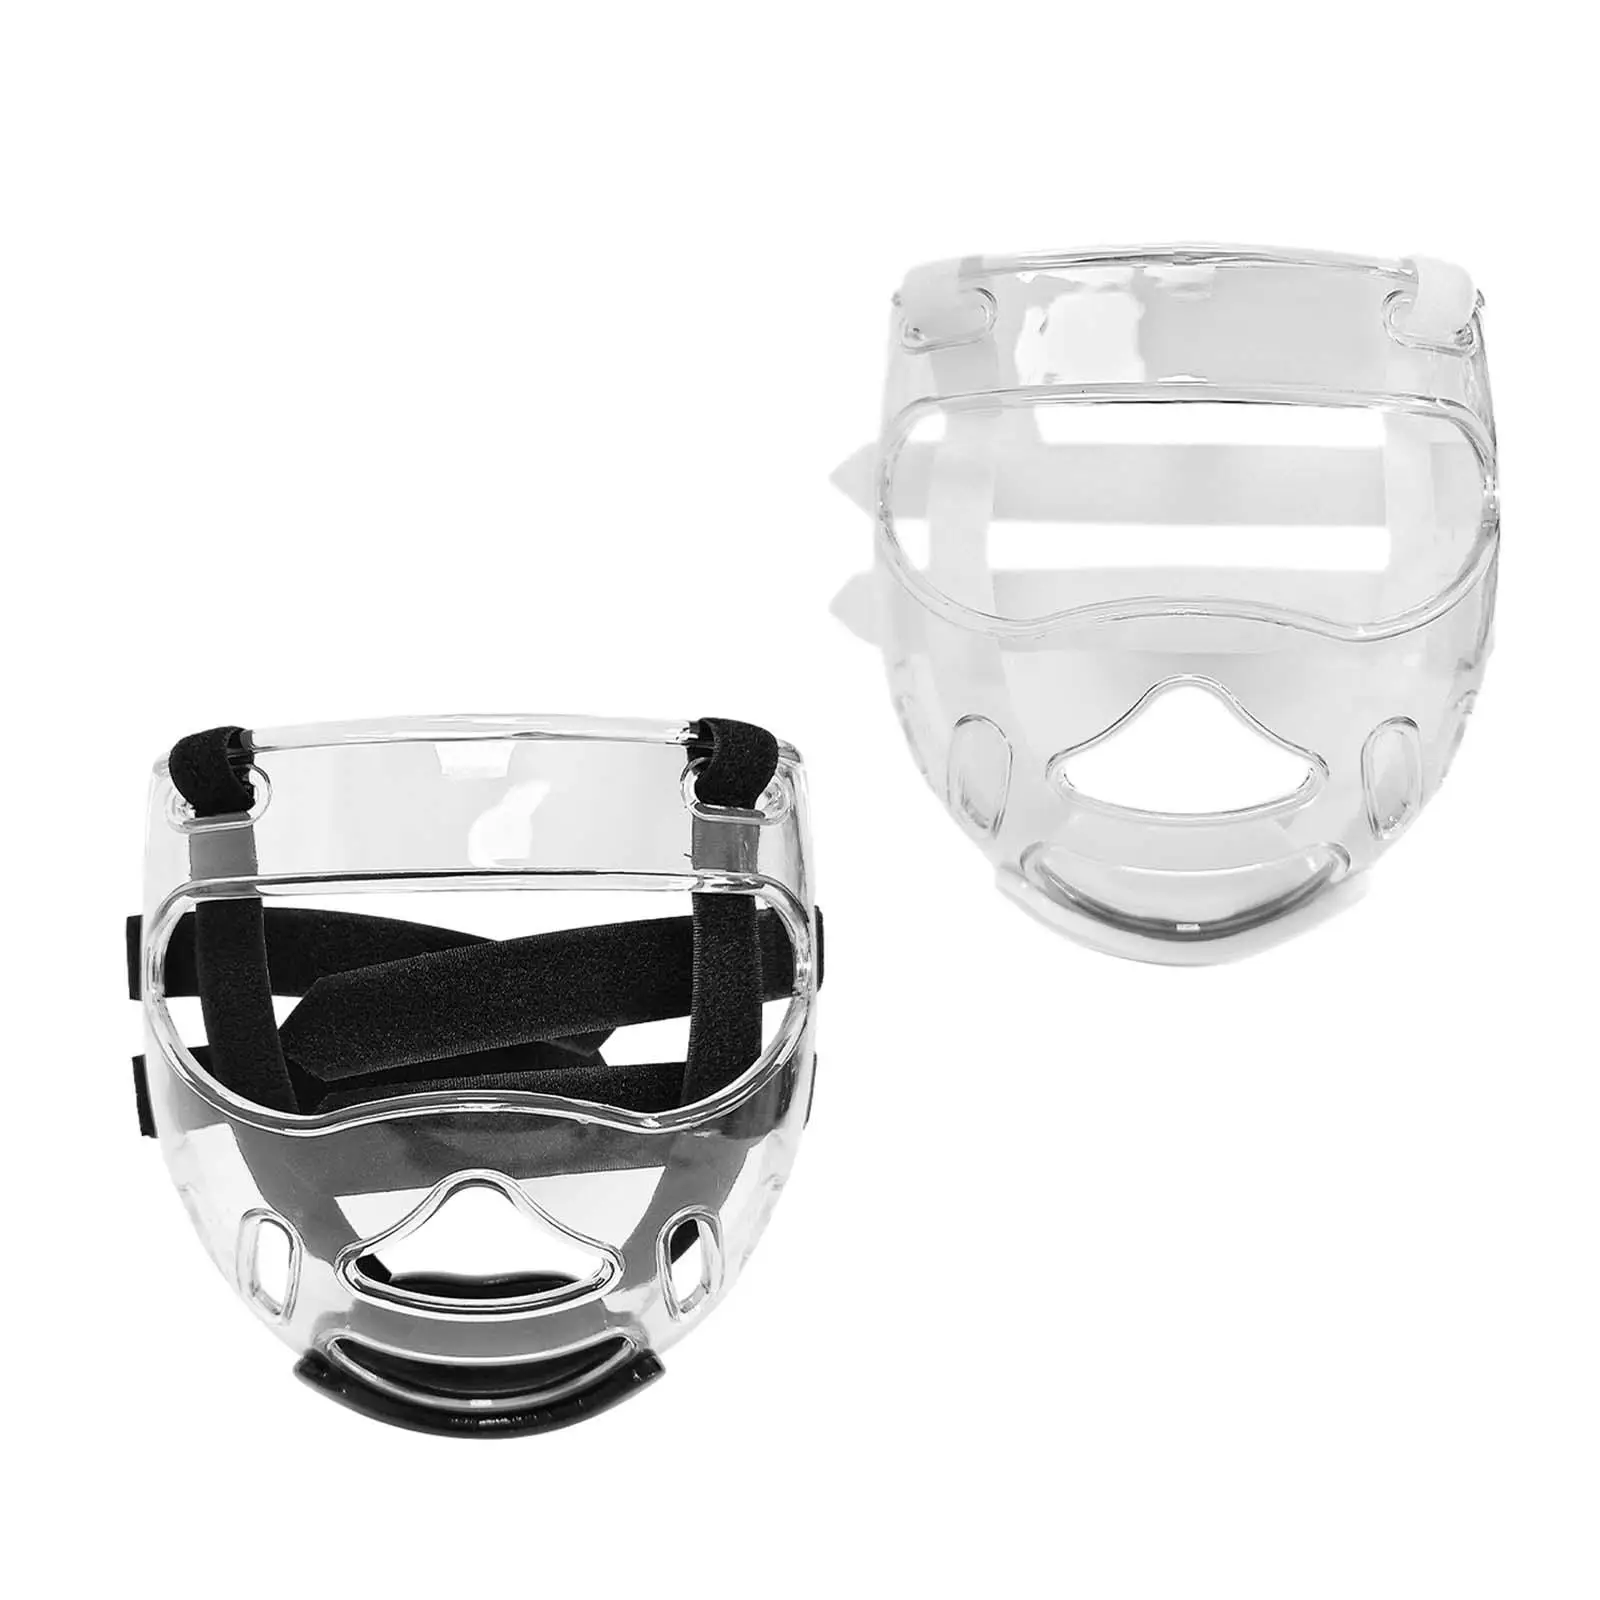 Taekwondo Mask Taekwondo Face Shield Detachable Kids Adults Portable Face Guard for Wrestling Muay Thai Sports Fighting Training